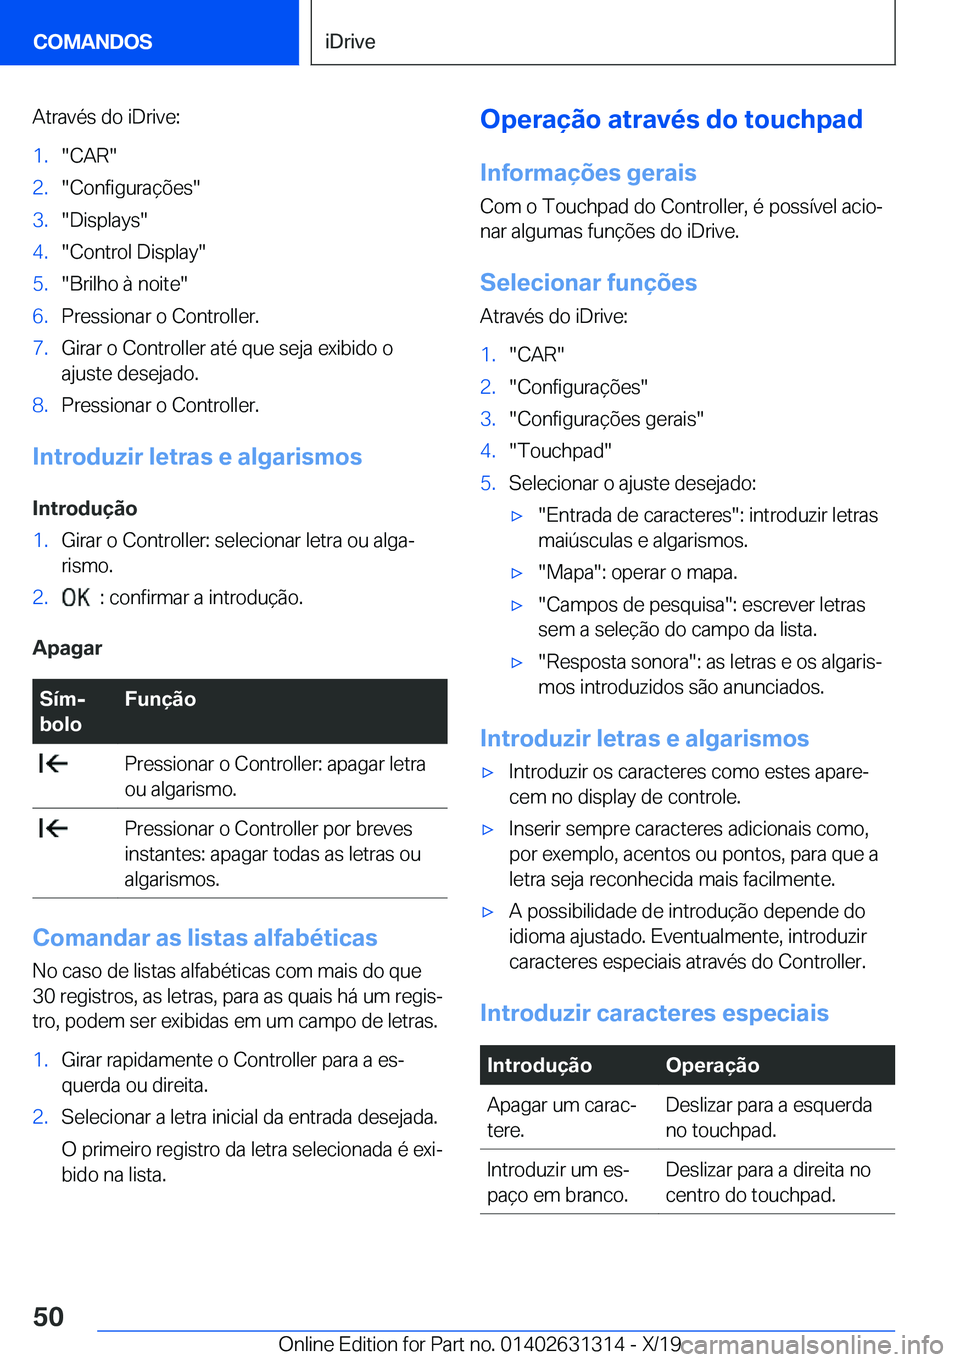 BMW M8 2020  Manual do condutor (in Portuguese) �A�t�r�a�v�é�s��d�o��i�D�r�i�v�e�:�1�.��C�A�R��2�.��C�o�n�f�i�g�u�r�a�